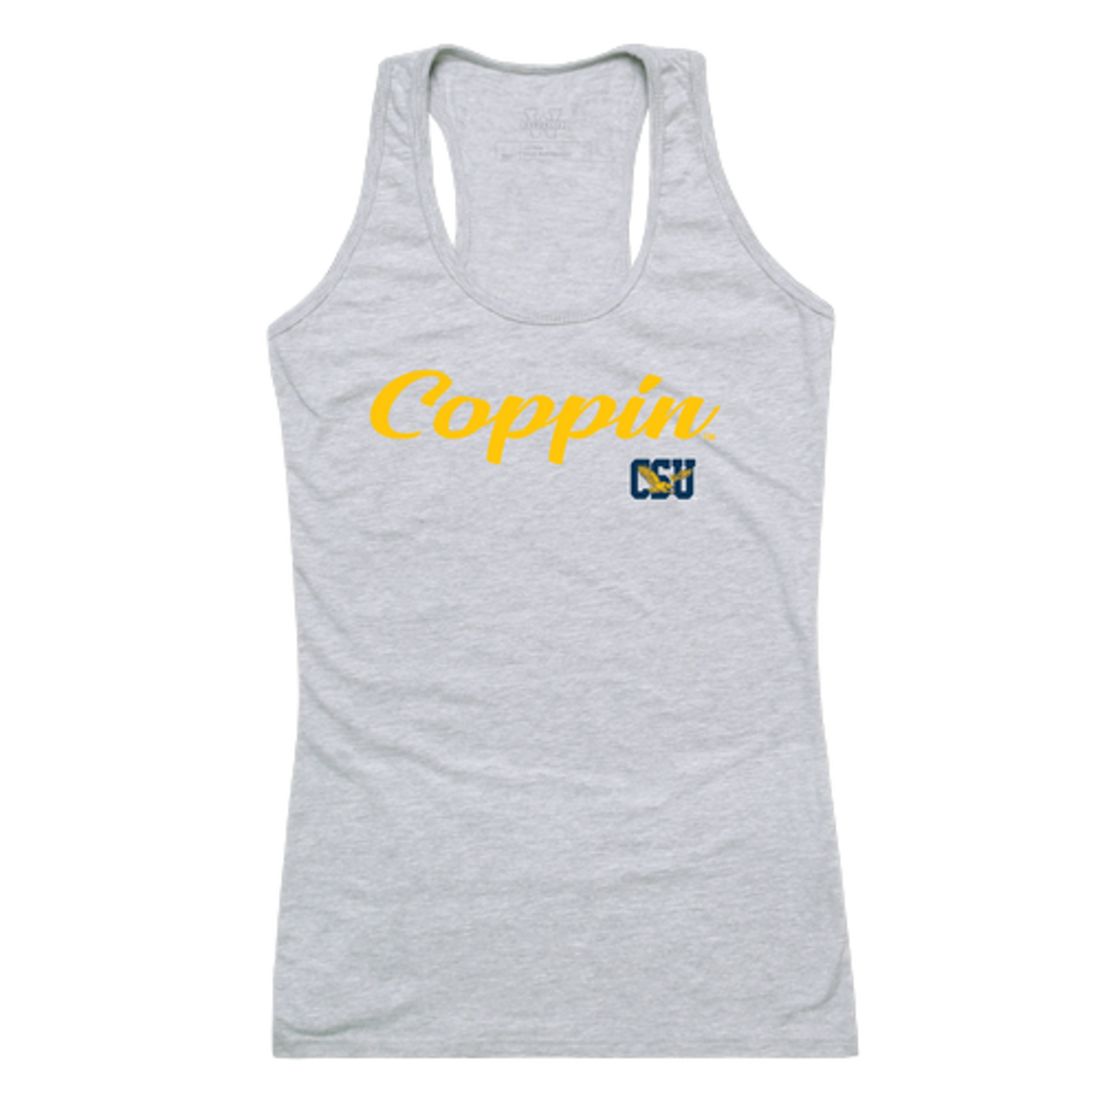 CSU Coppin State University Eagles Womens Script Tank Top T-Shirt-Campus-Wardrobe